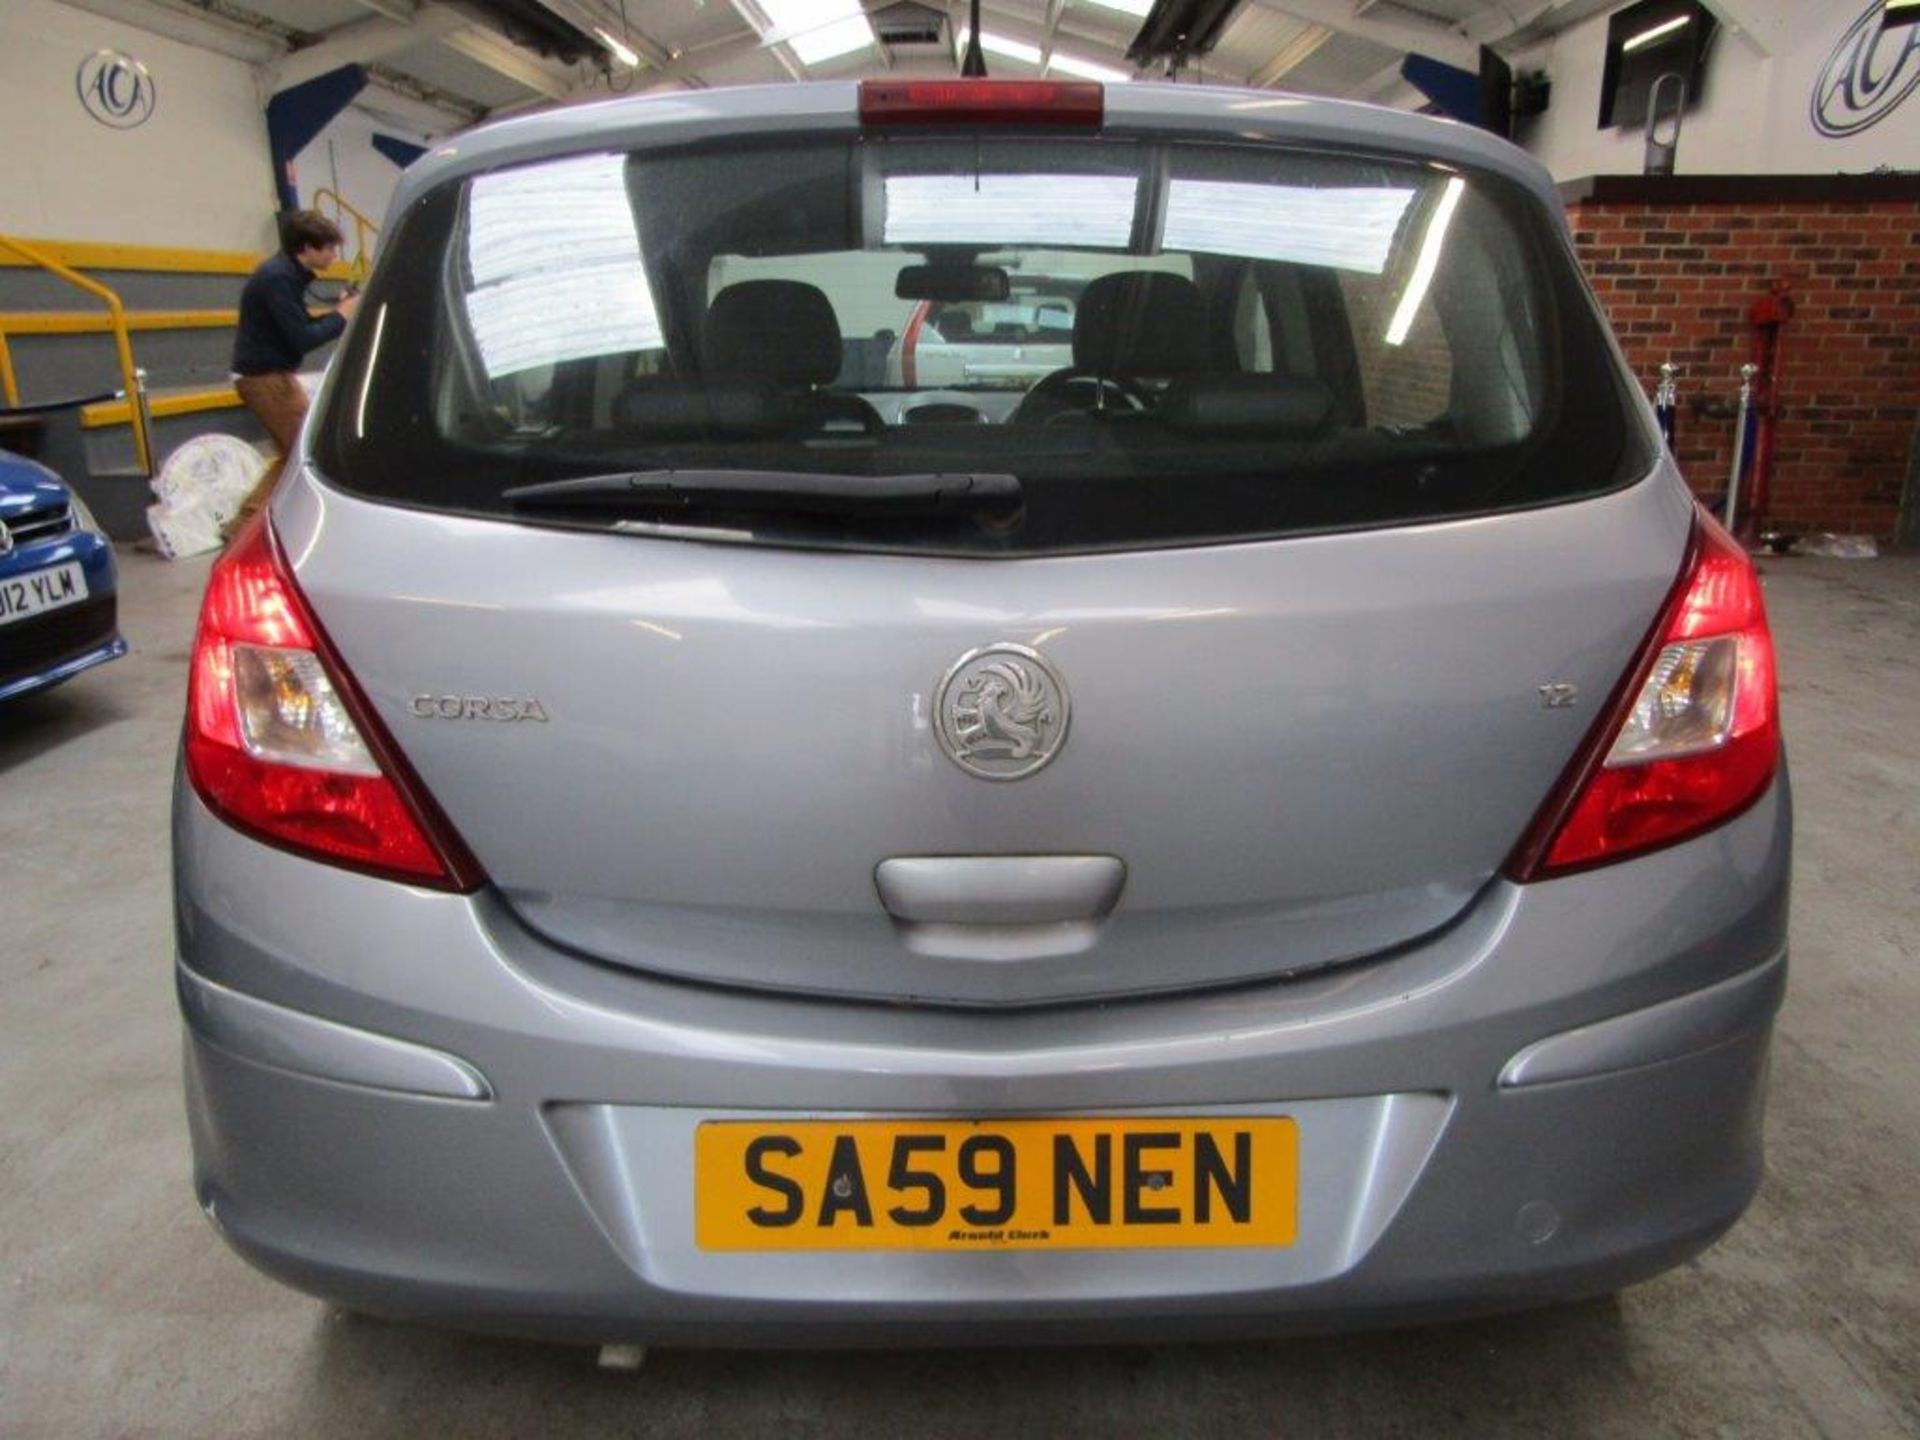 59 09 Vauxhall Corsa Design - Image 6 of 22